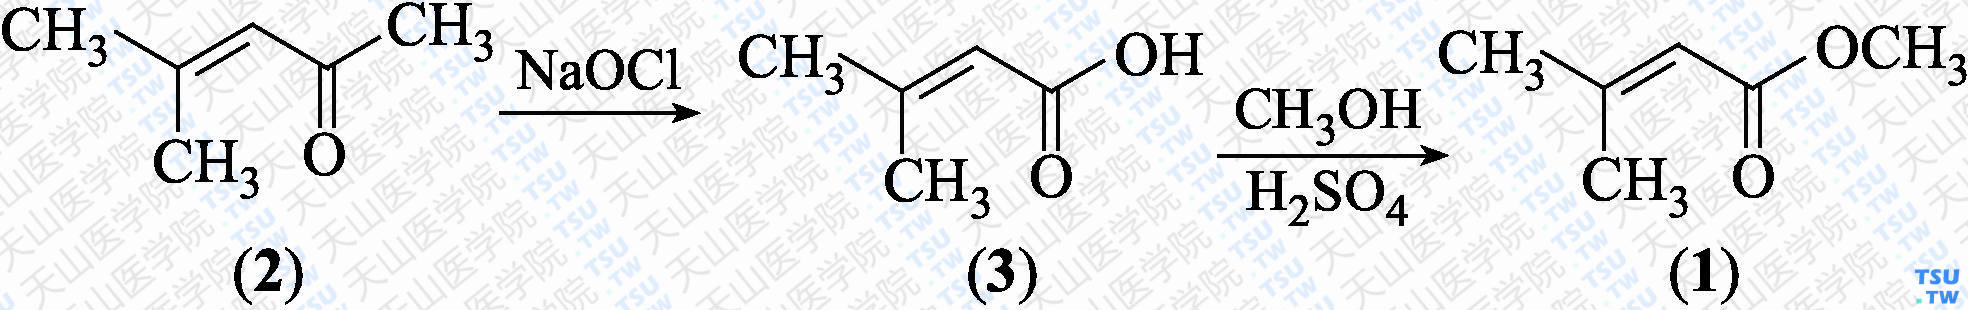 3-甲基丁-2-烯酸甲酯（分子式：C<sub>6</sub>H<sub>10</sub>O<sub>2</sub>）的合成方法路线及其结构式